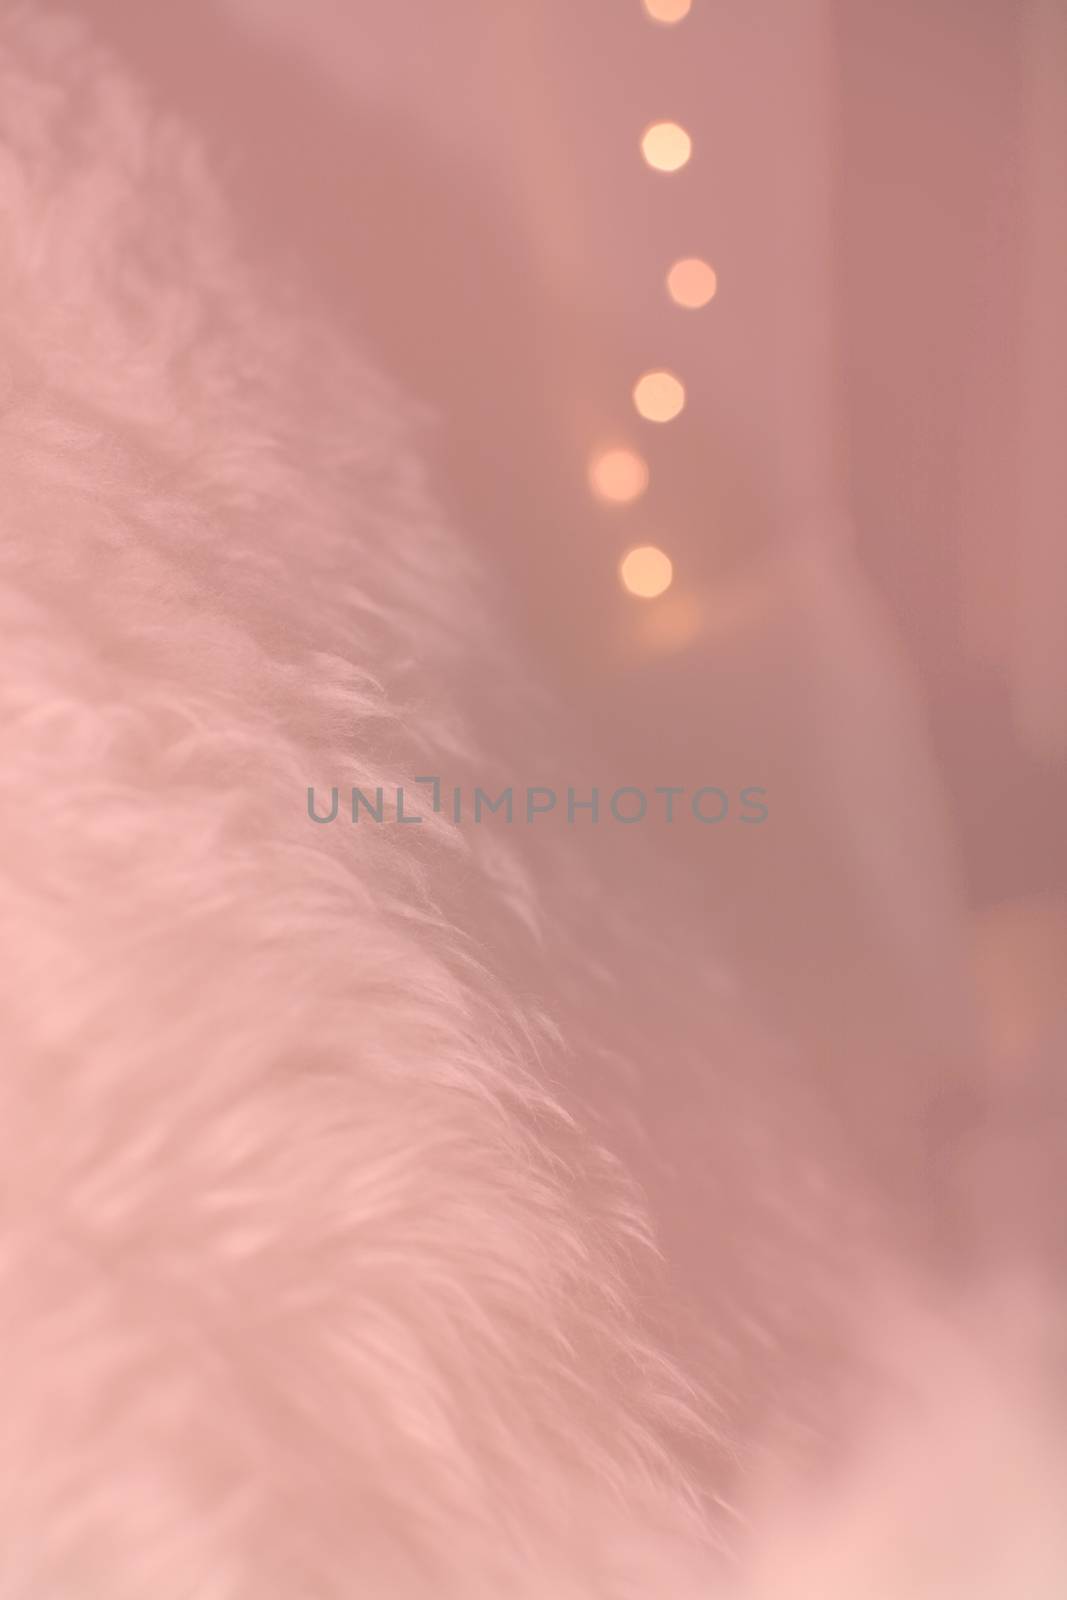 White lambswool fur and bokeh christmas lights by ArtesiaWells